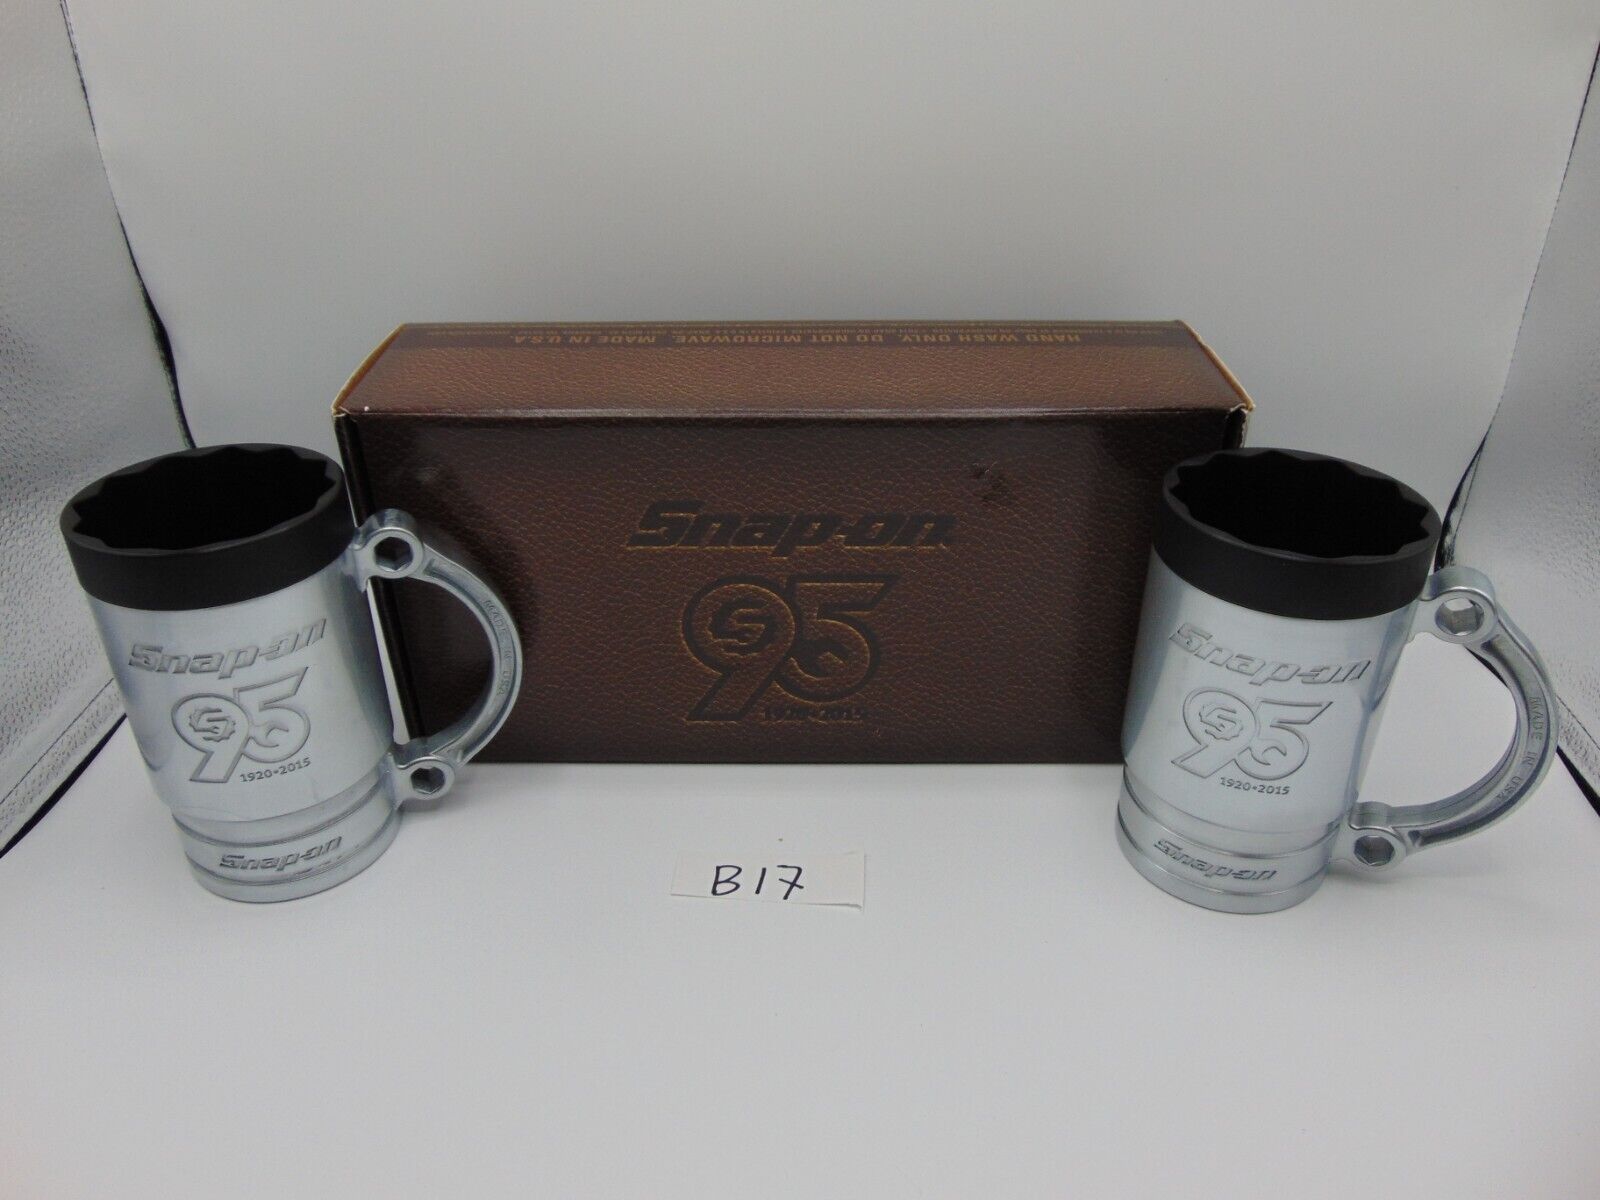 Snap-on Tools Limited Edition 95th Anniversary Flankard Mug Set USA Made In Box